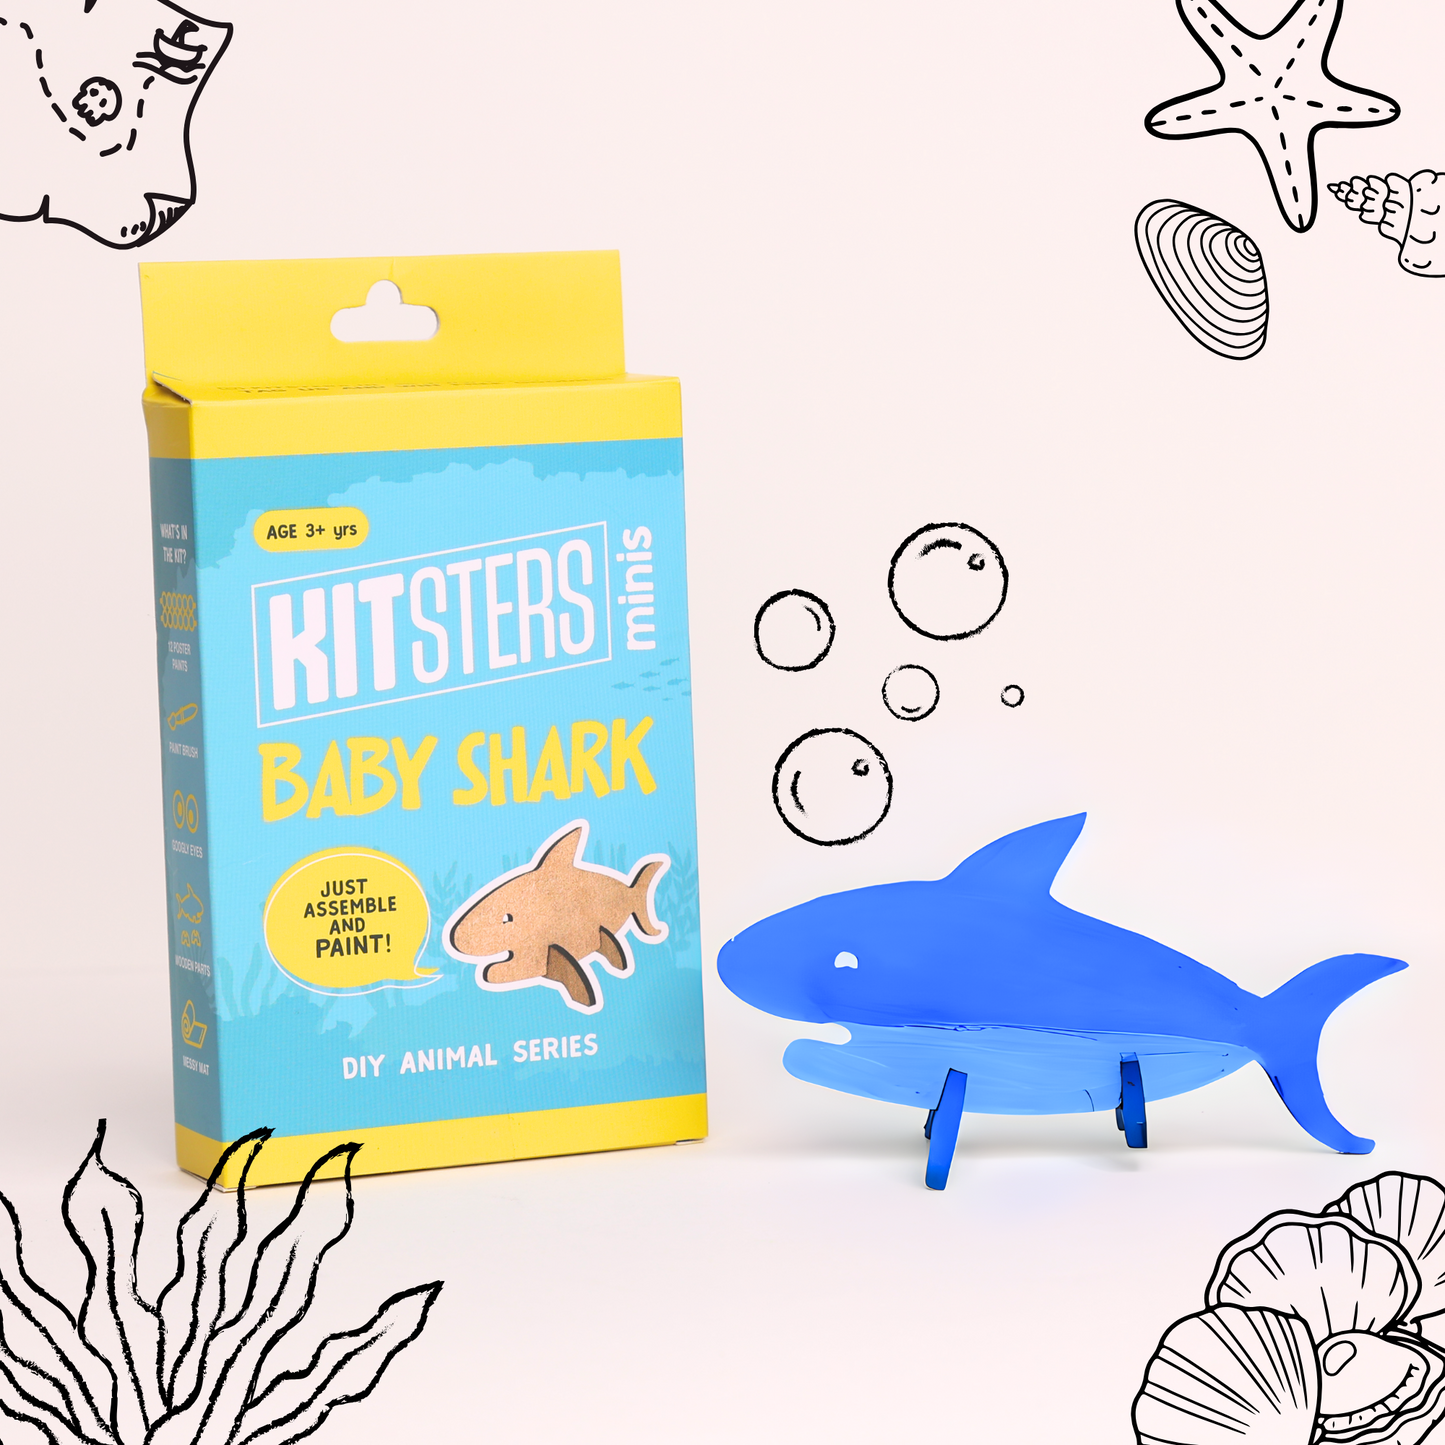 Kitsters Minis: Baby Shark